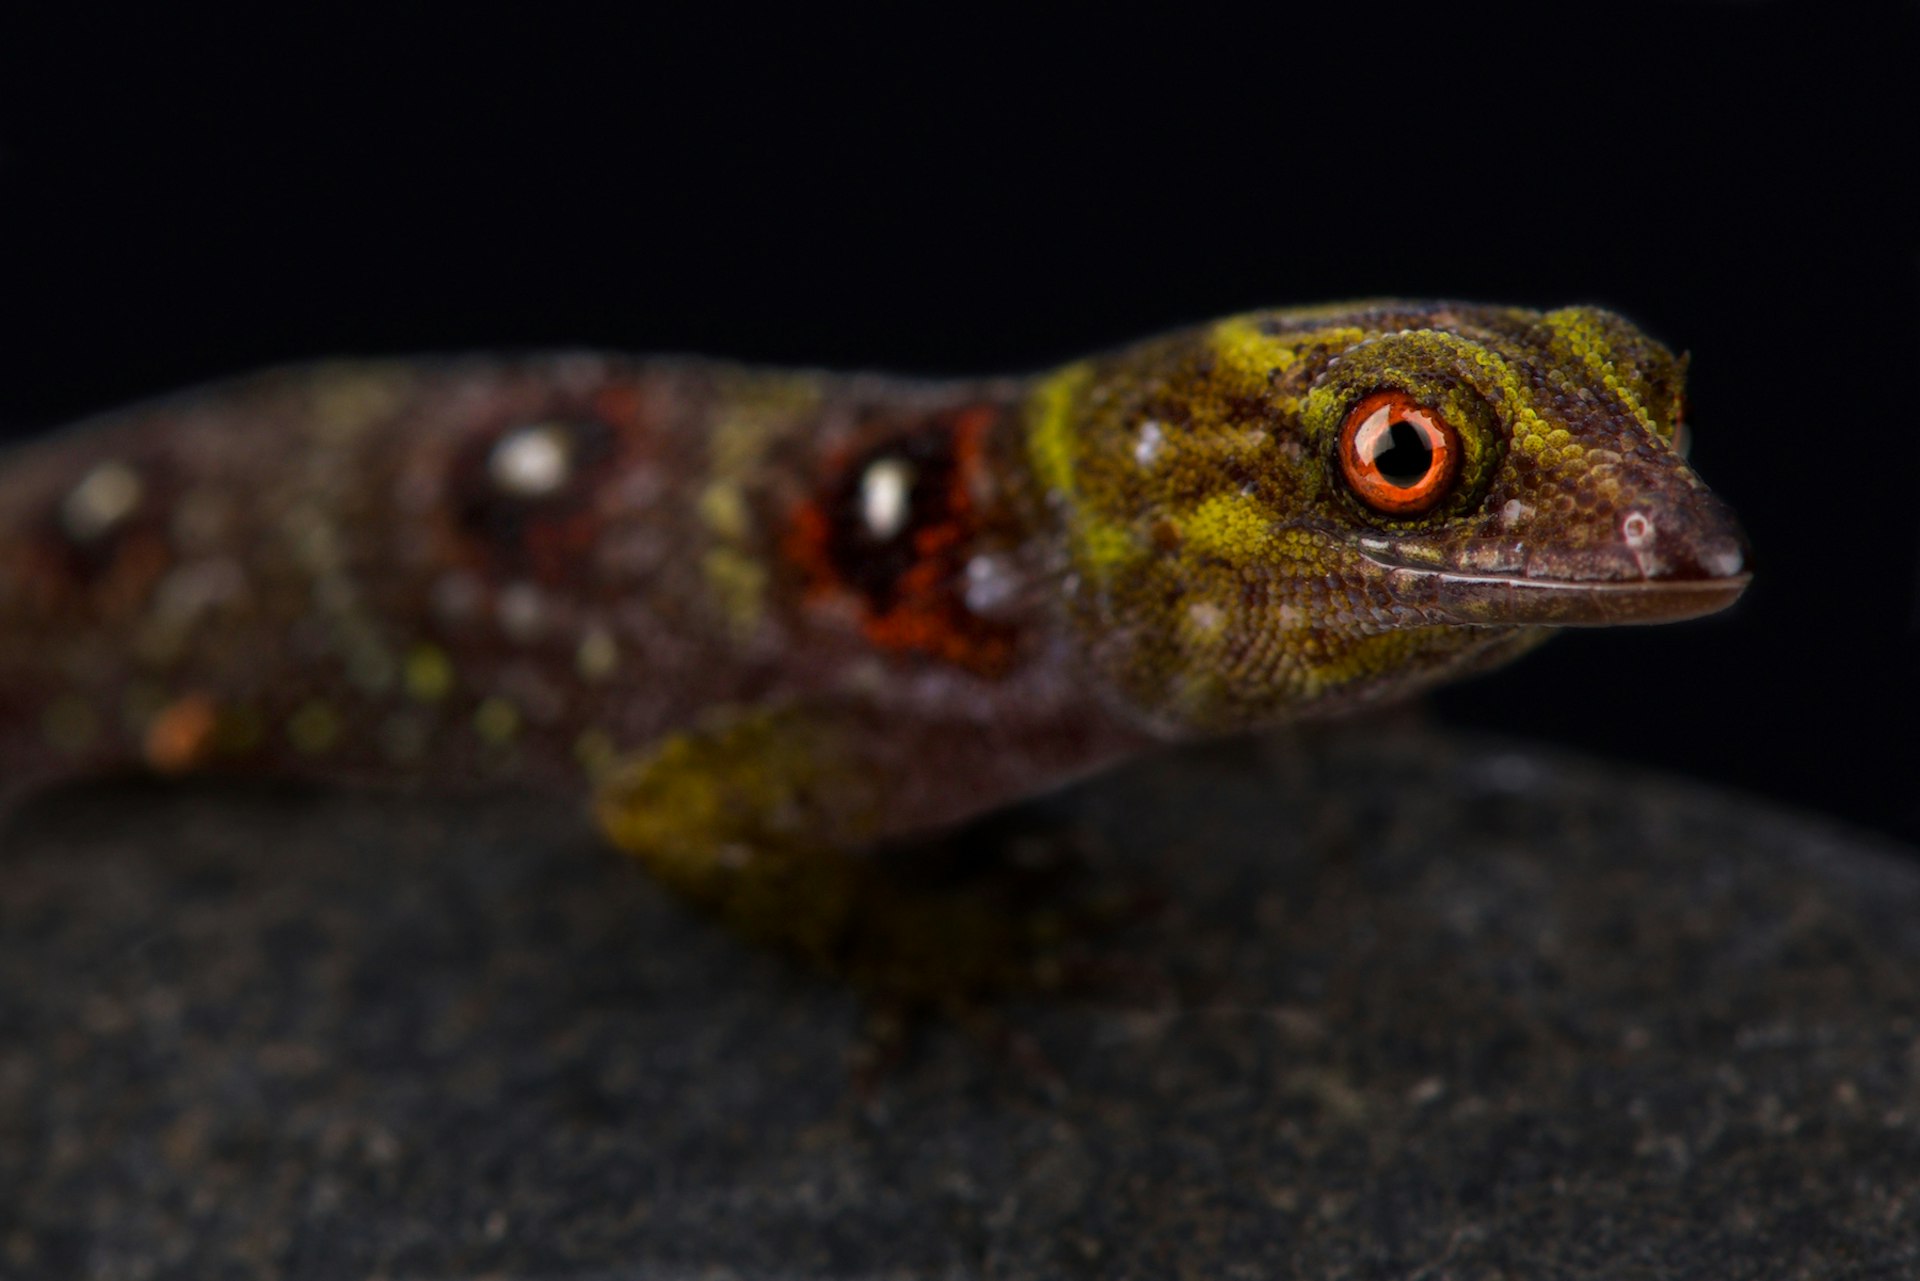 A close-up shot of a colorful Union Island gecko